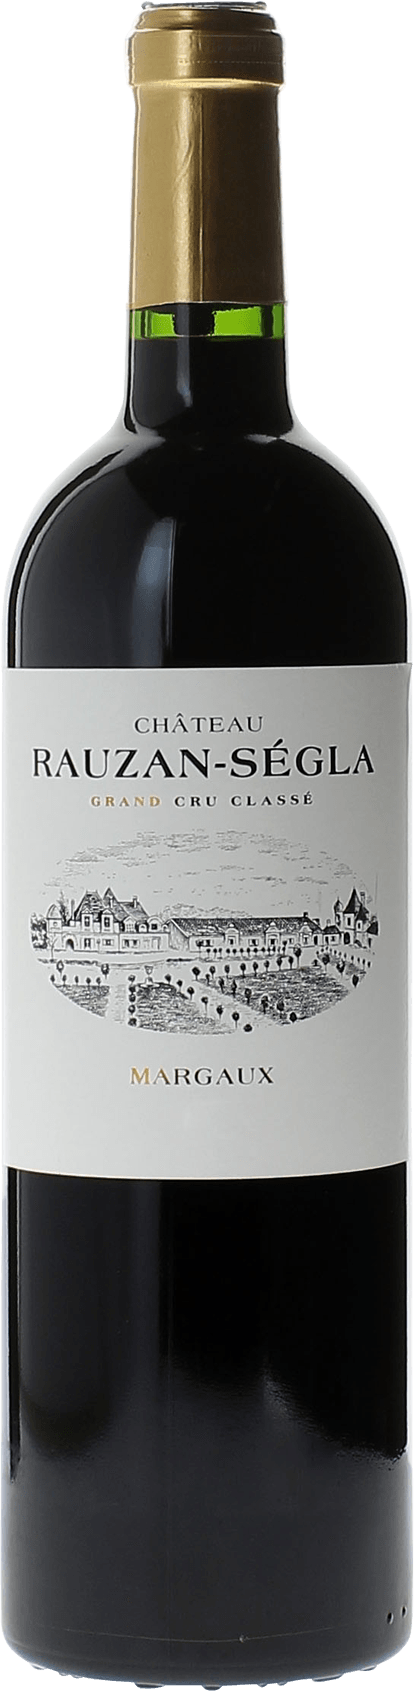 Rauzan-segla 2001 2me Grand cru class Margaux, Bordeaux rouge